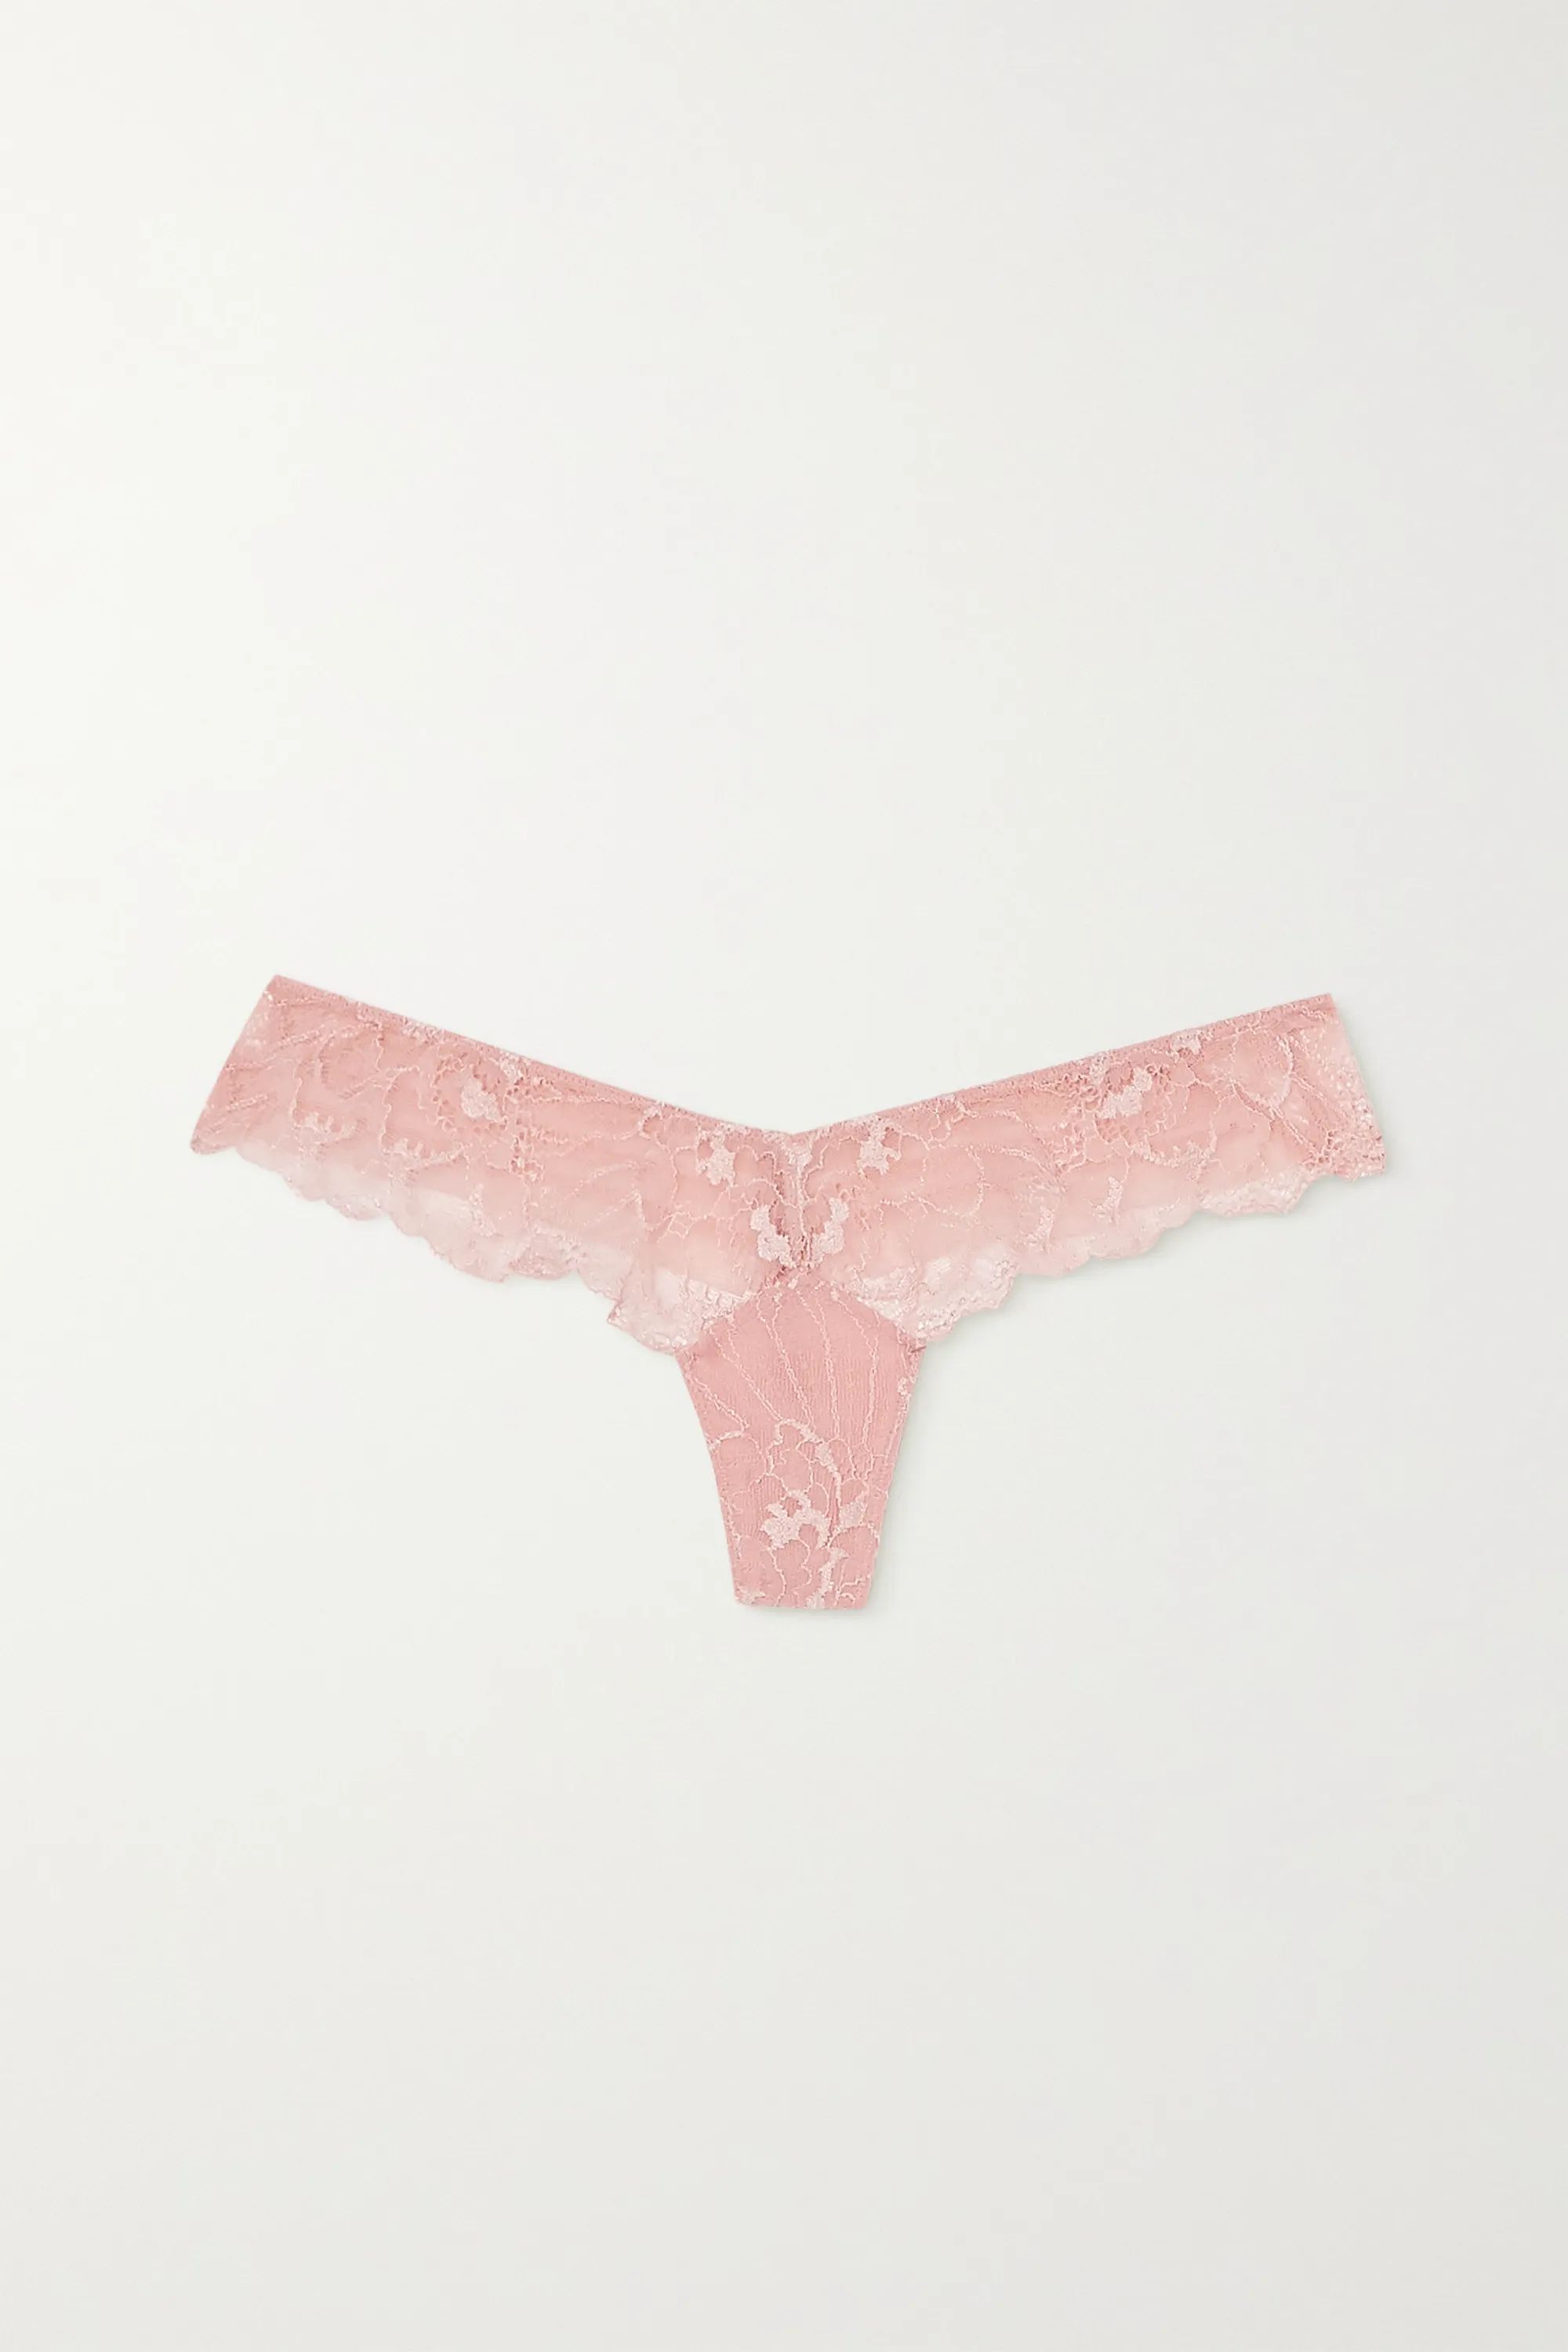 Pastel pink Adele Leavers lace-trimmed stretch-tulle thong | La Perla | NET-A-PORTER | NET-A-PORTER (US)